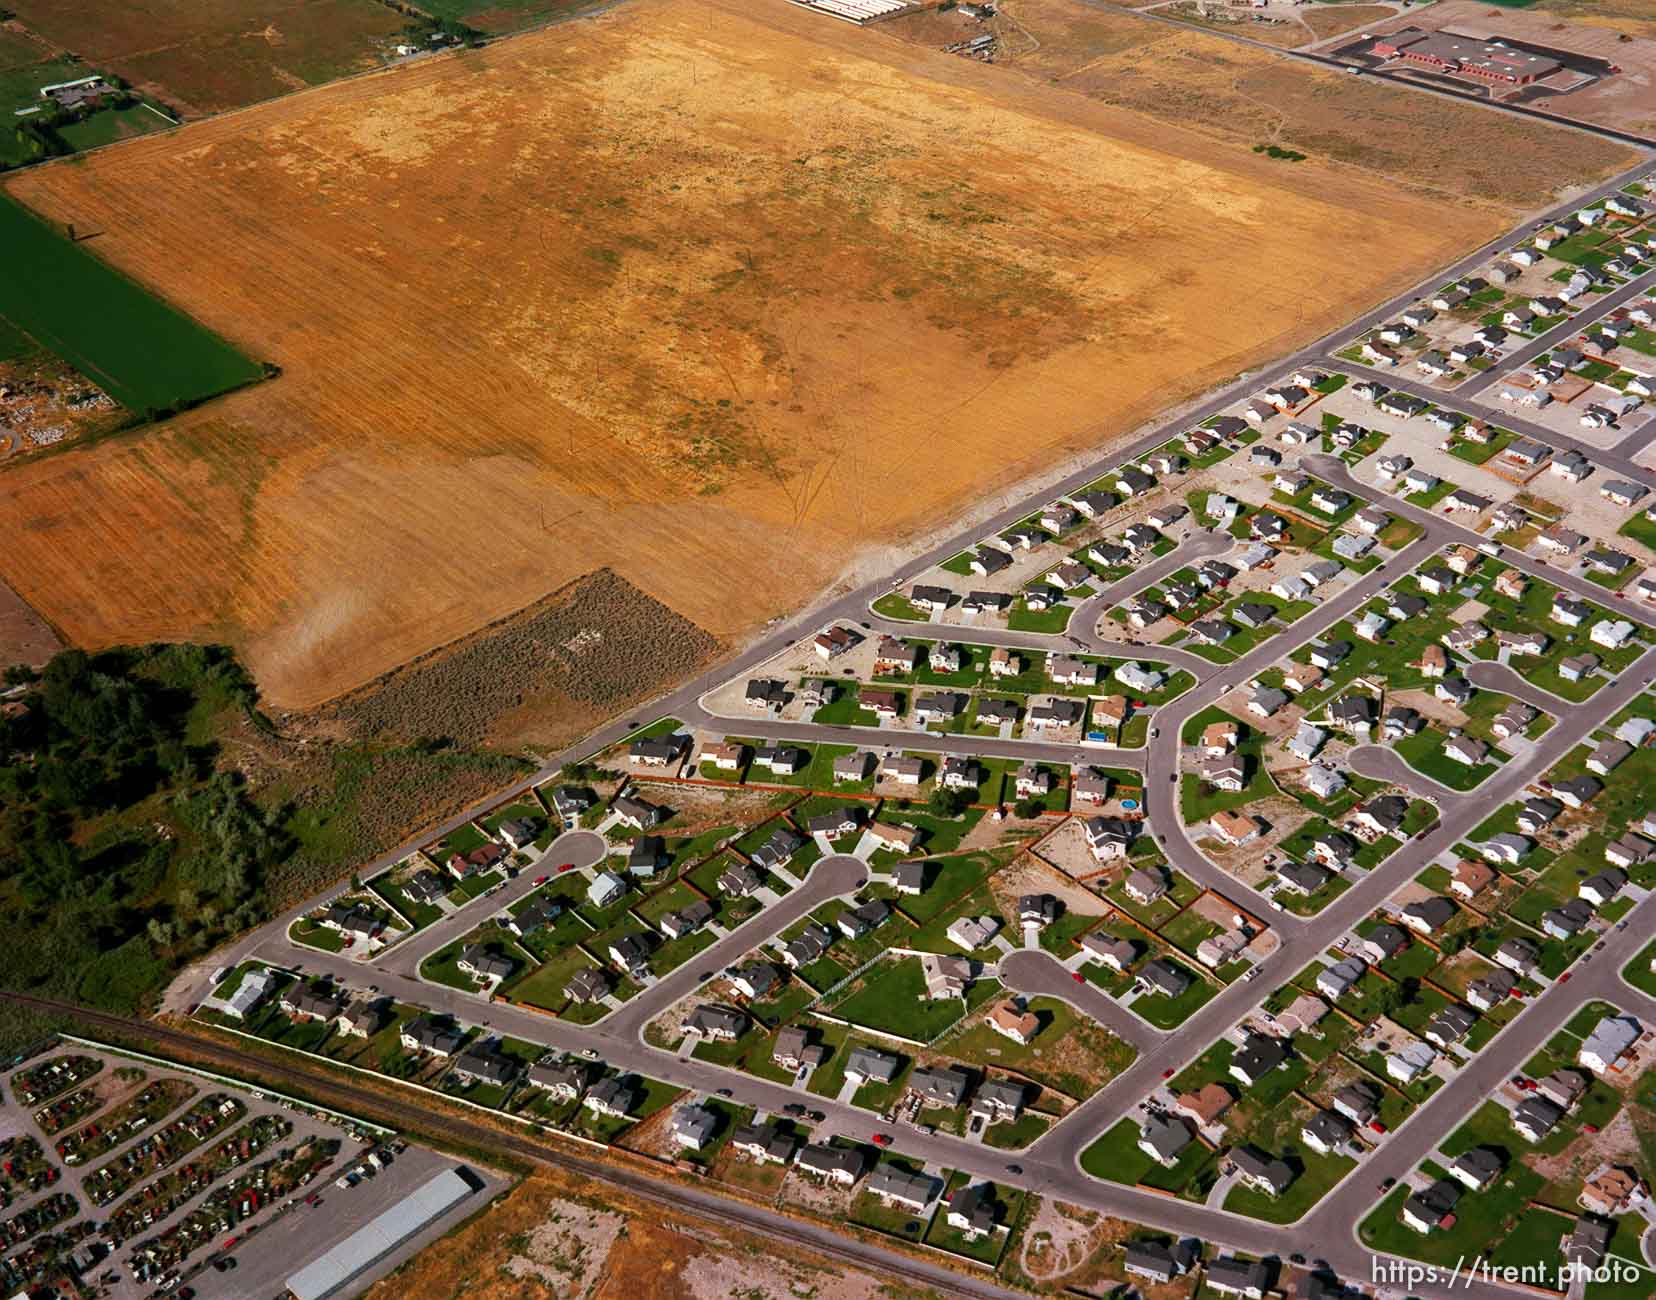 Salt Lake Valley Suburban Development